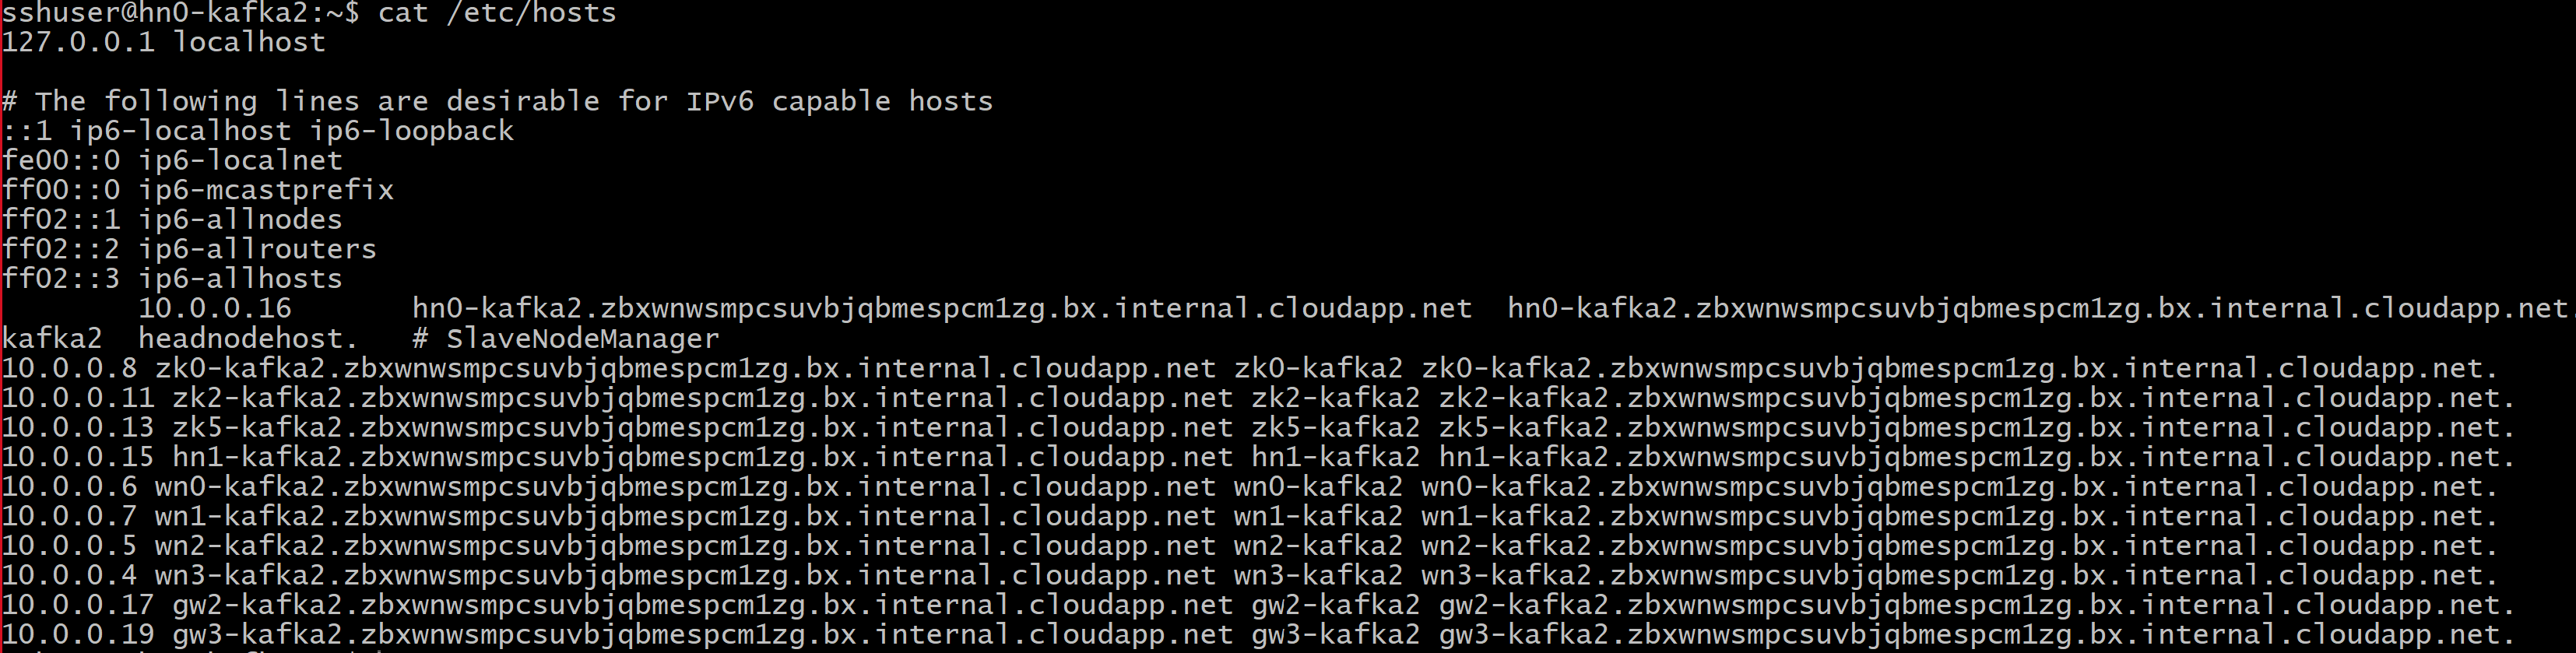 Screenshot showing hosts file output.